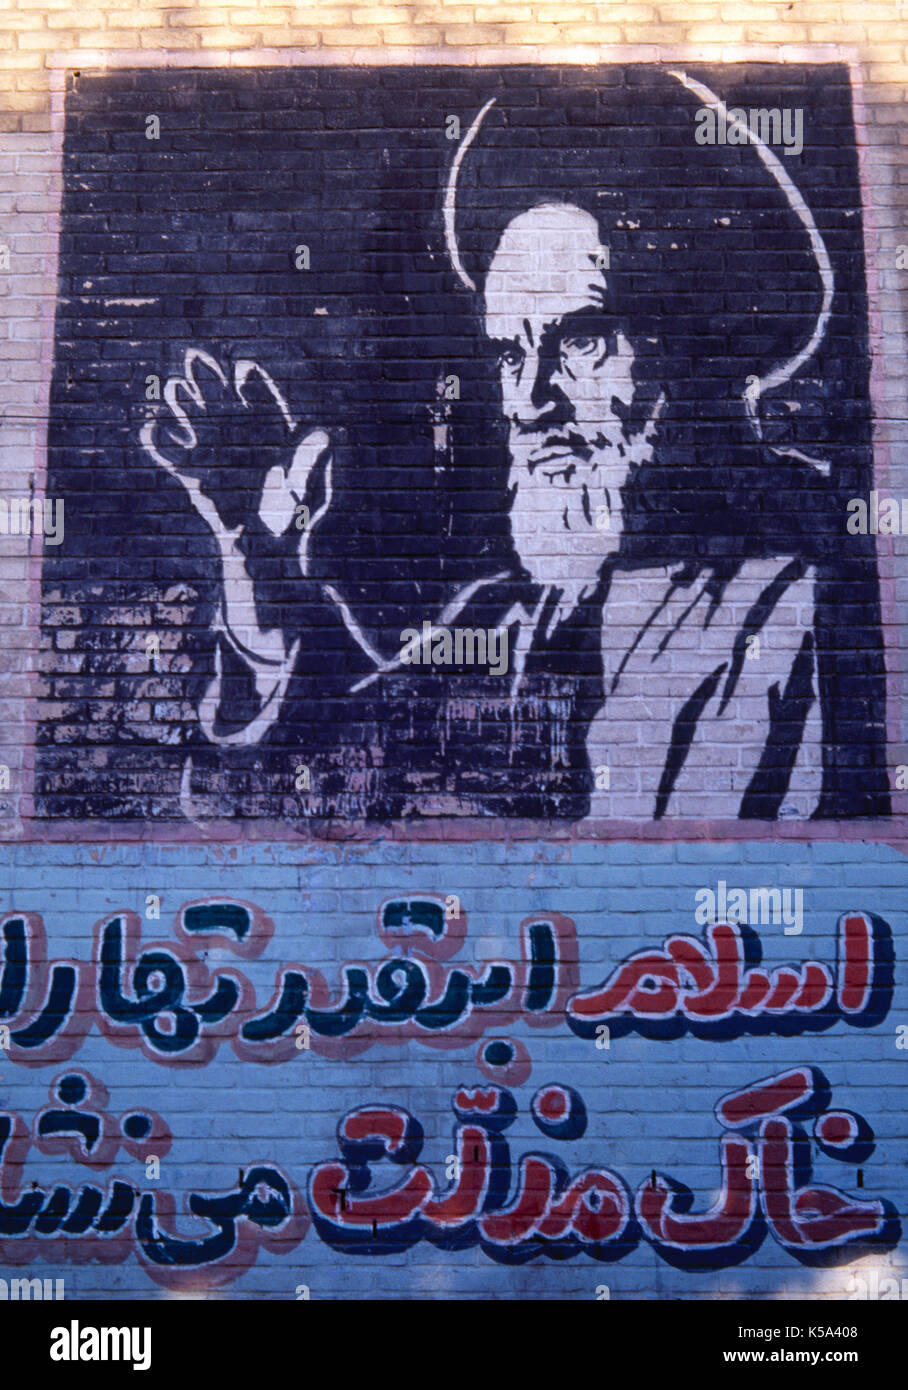 Ruhollah Khomeini (1902-1989). Ayatollah Khomeini was an Iranian Shia Muslim religious leader, philosopher and revolutionary. Propagandistic mural. Mosque of Tehran, Islamic Republic of Iran. Stock Photo